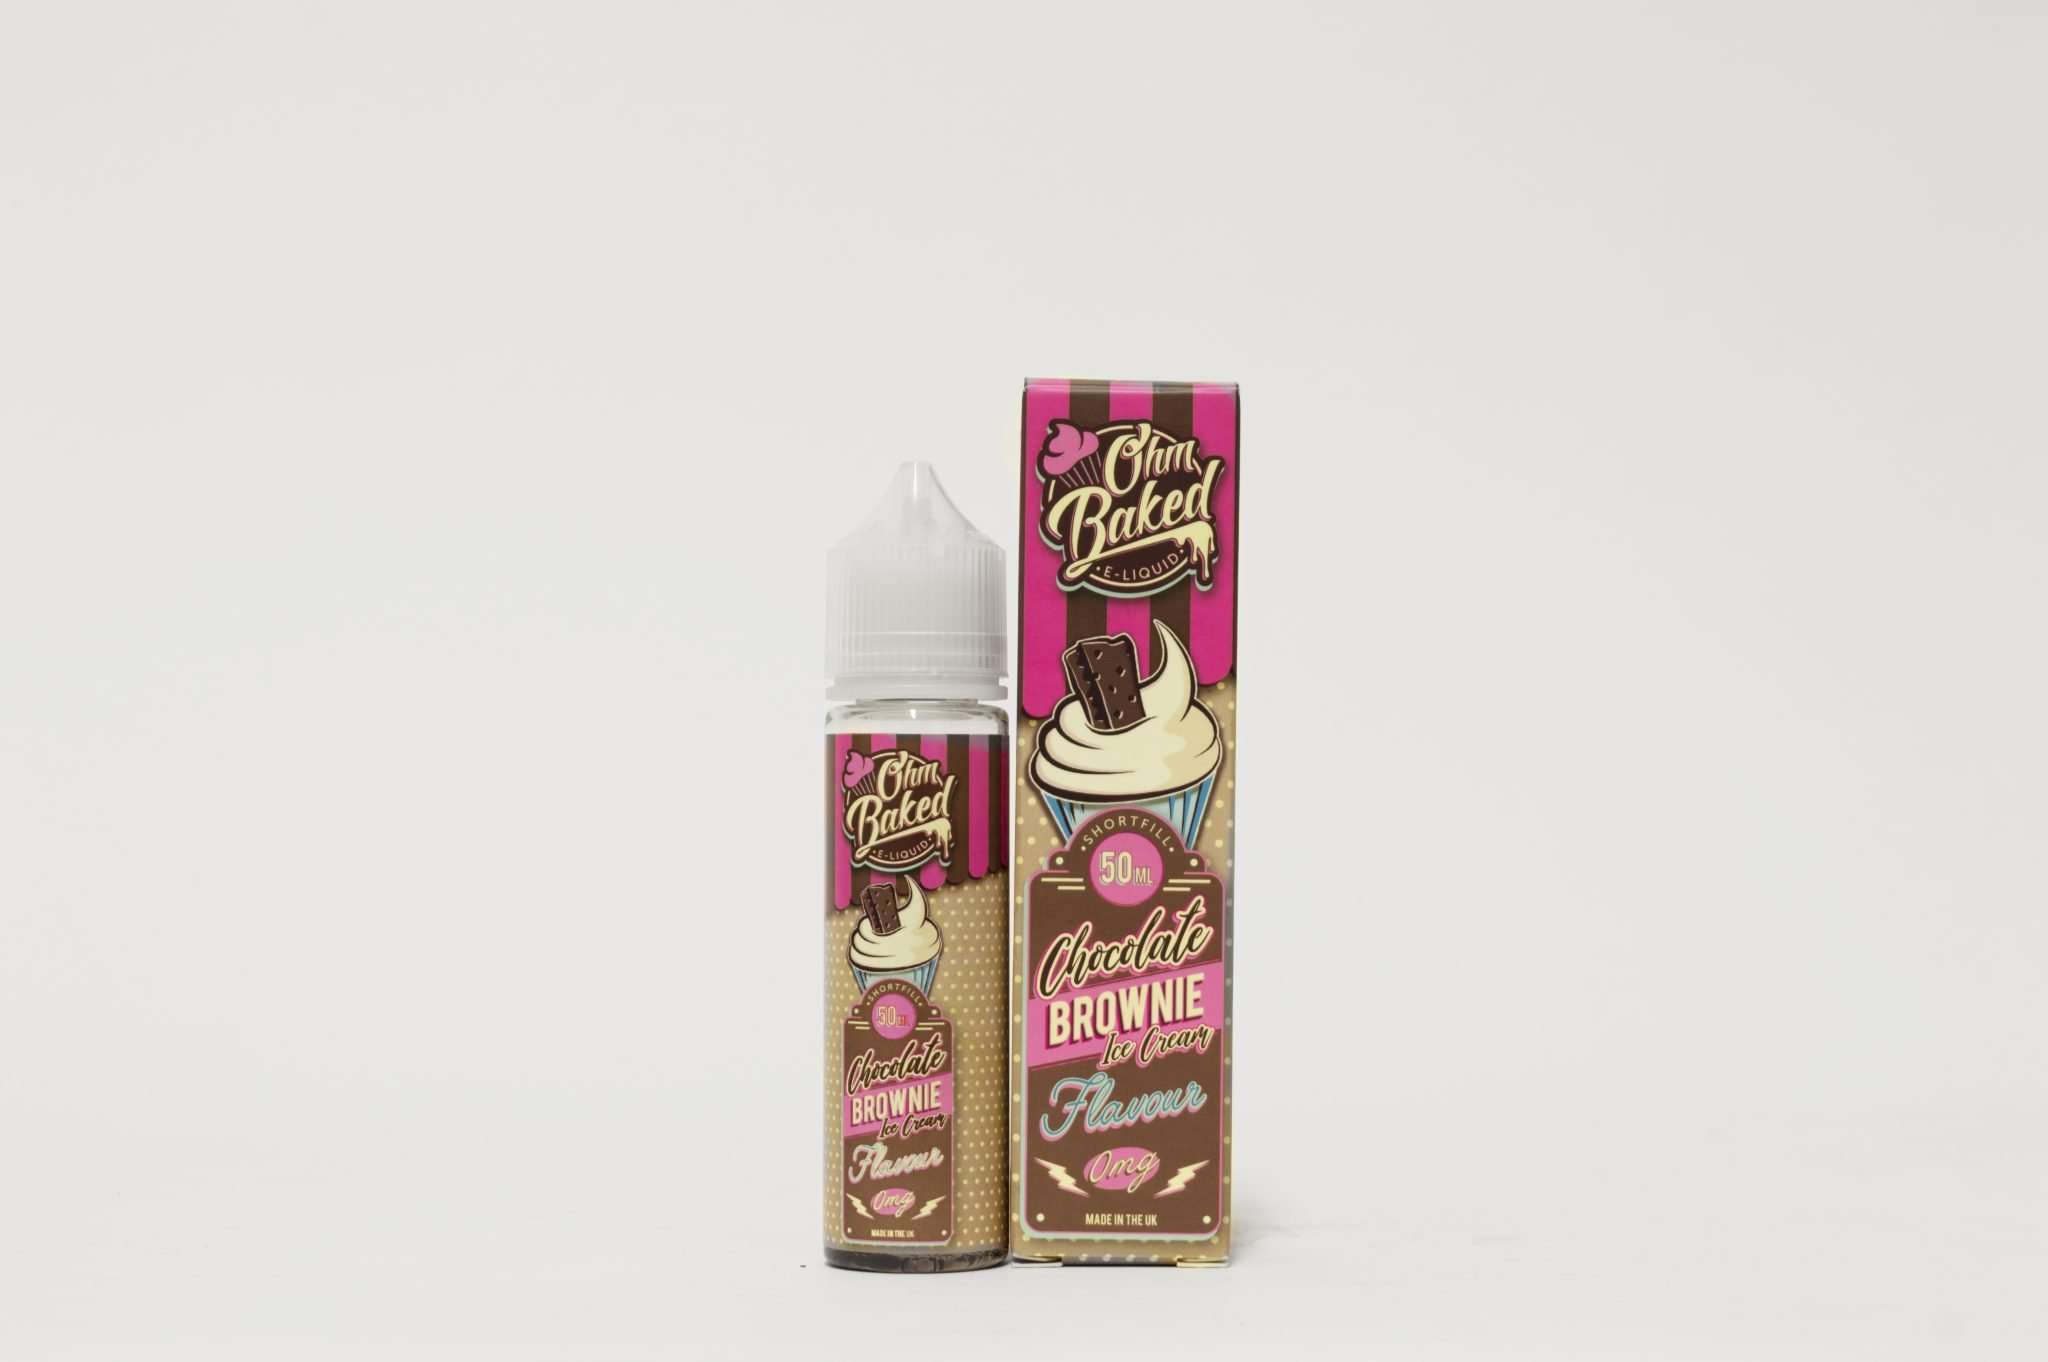  Ohm Baked E Liquid - Chocolate Brownie Ice Cream - 50ml 